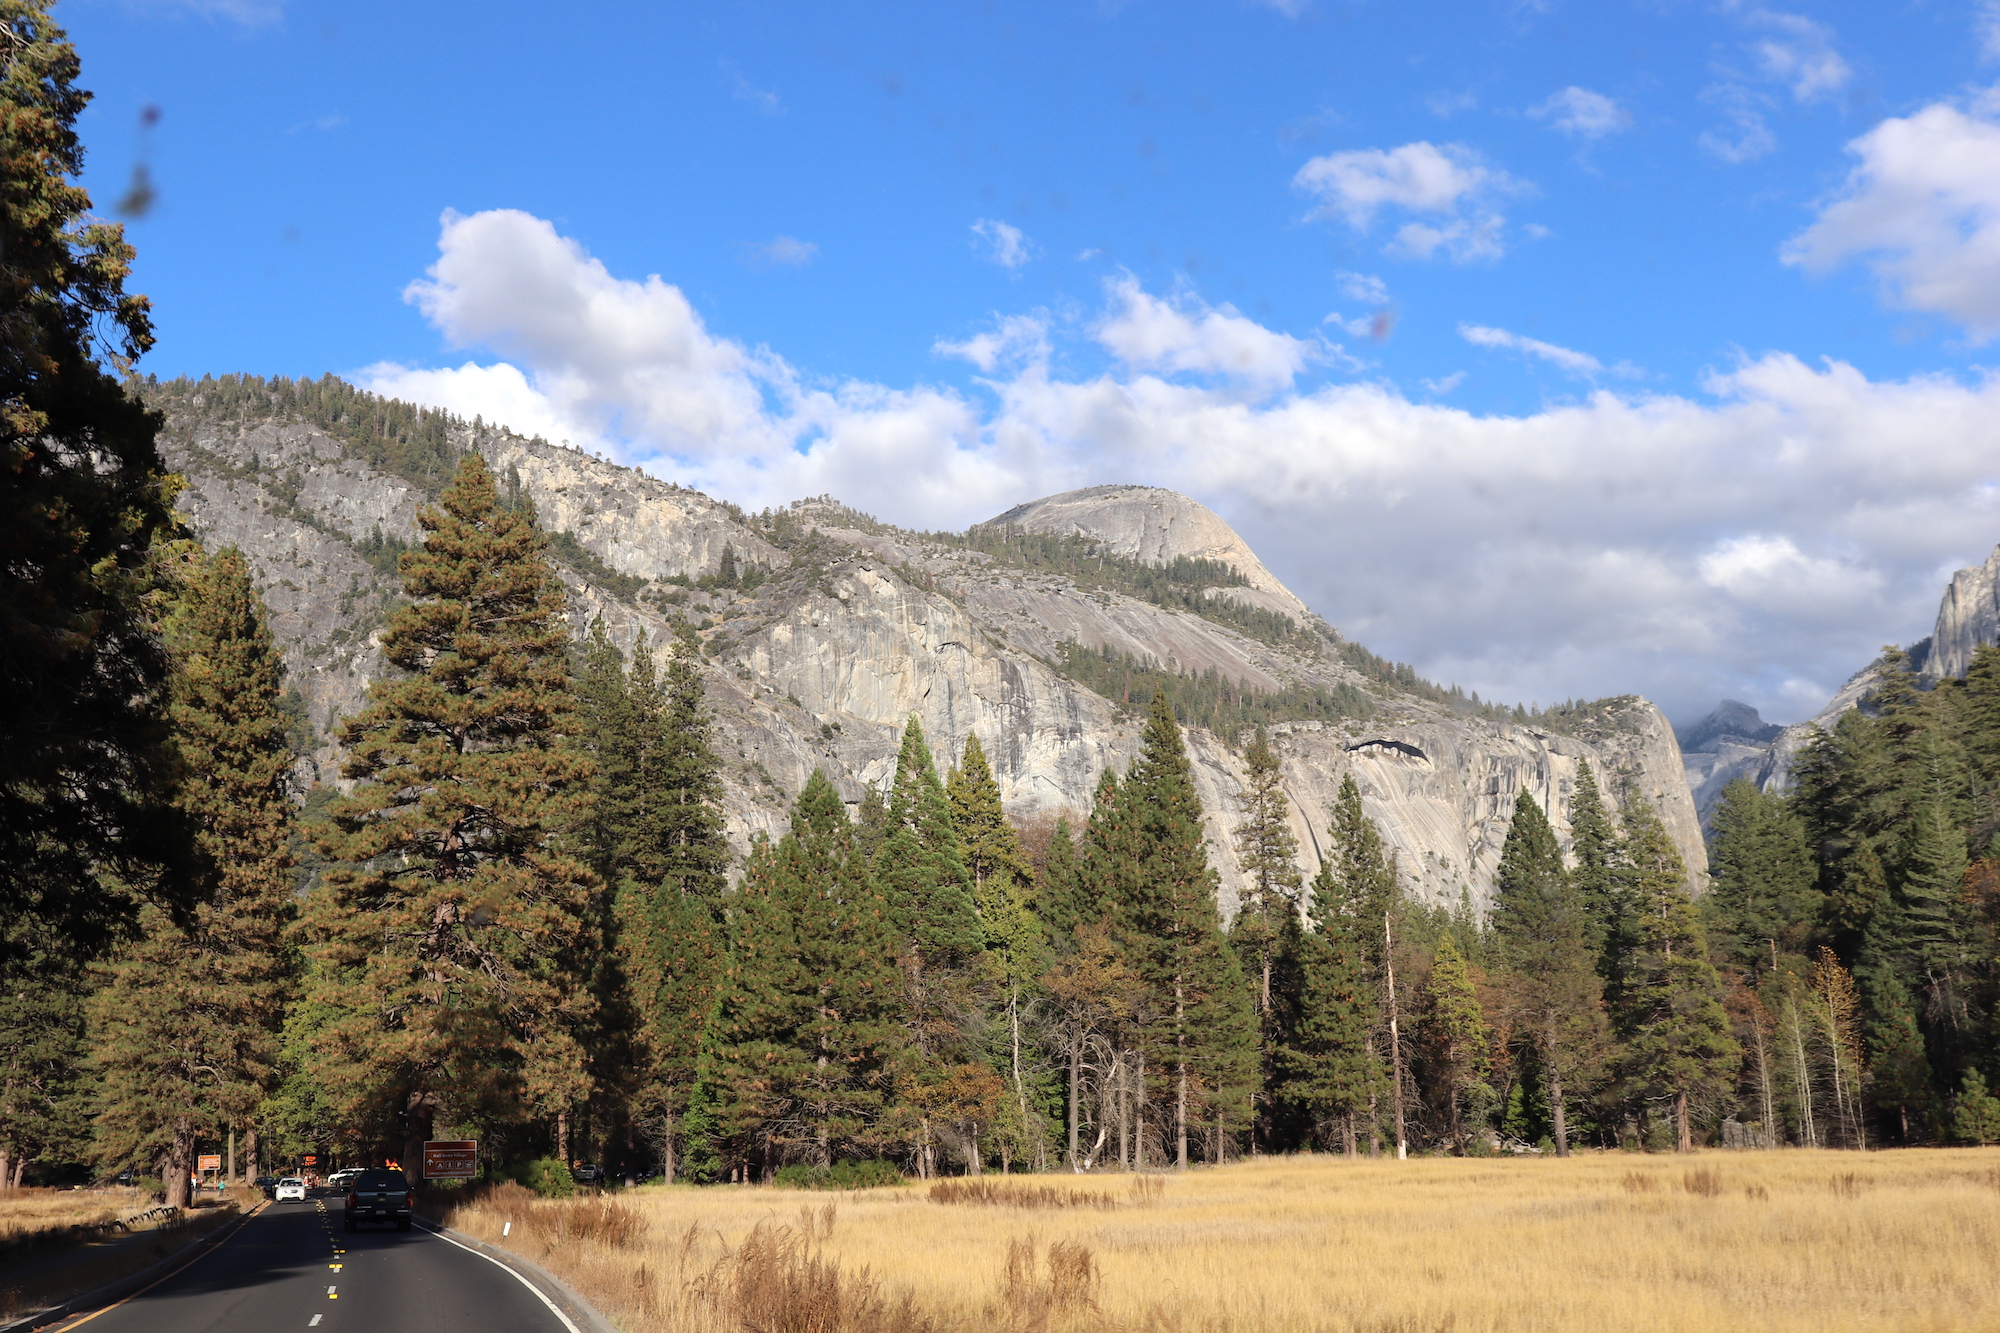 Welcoming in Yosemite